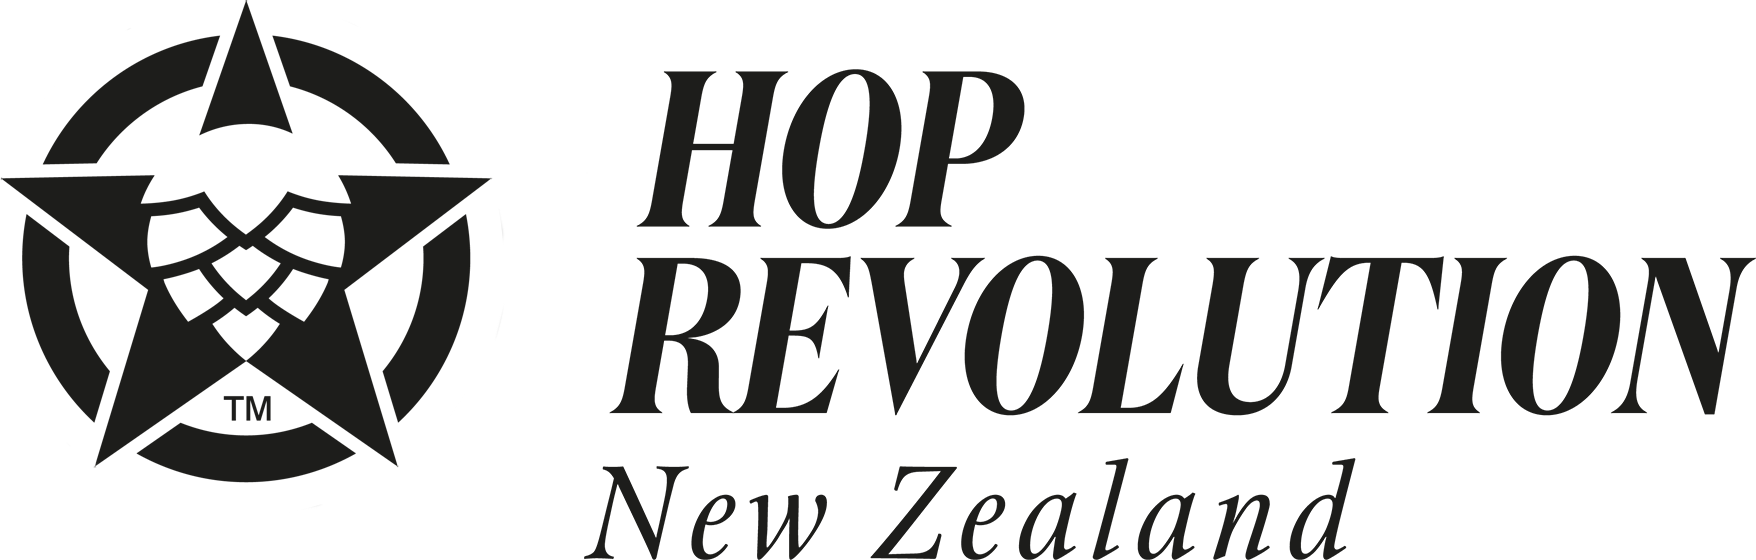 Hop Revolution New Zealand logo